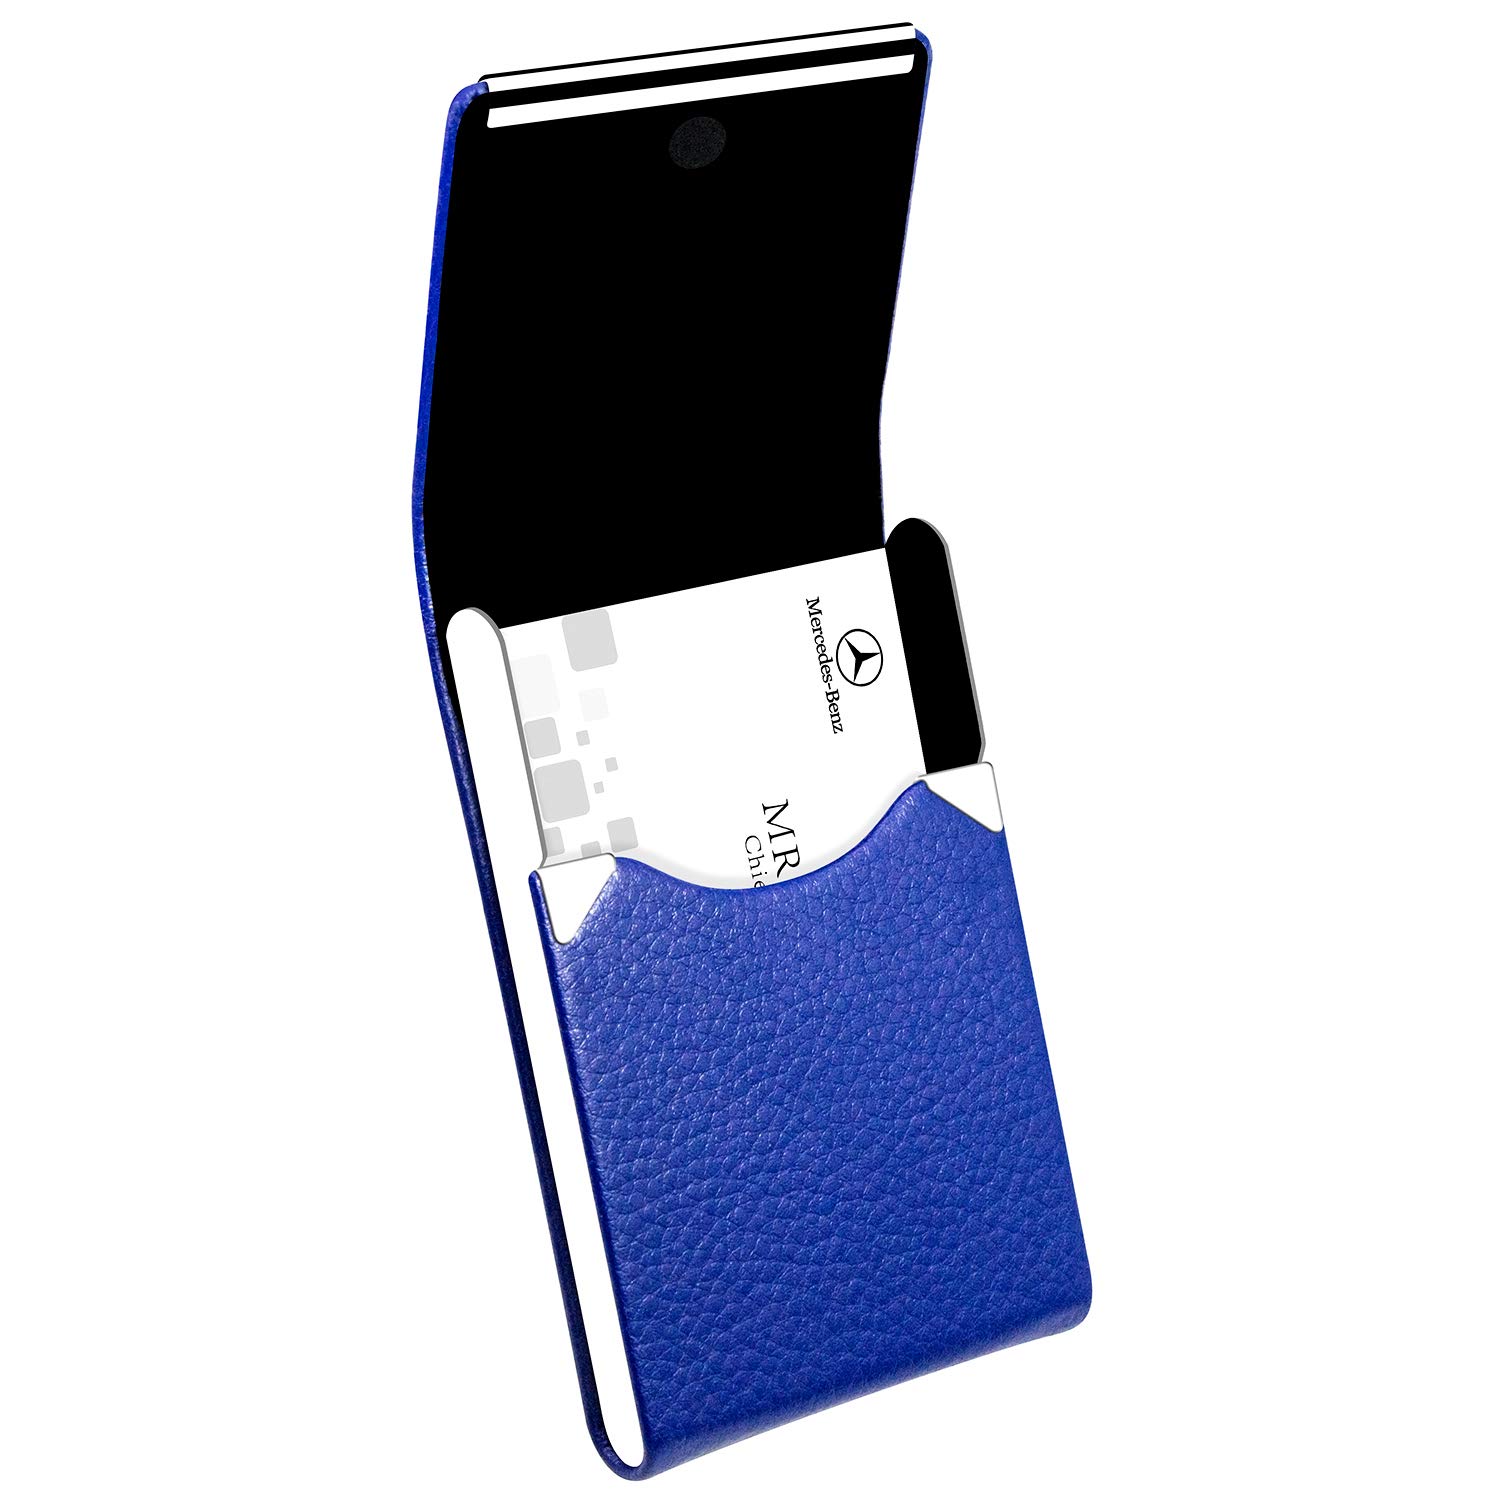 Padike Professional Business Card Holder PU Leather Business Card Case Name Card Holder Slim Metal Pocket Card Holder with Magne